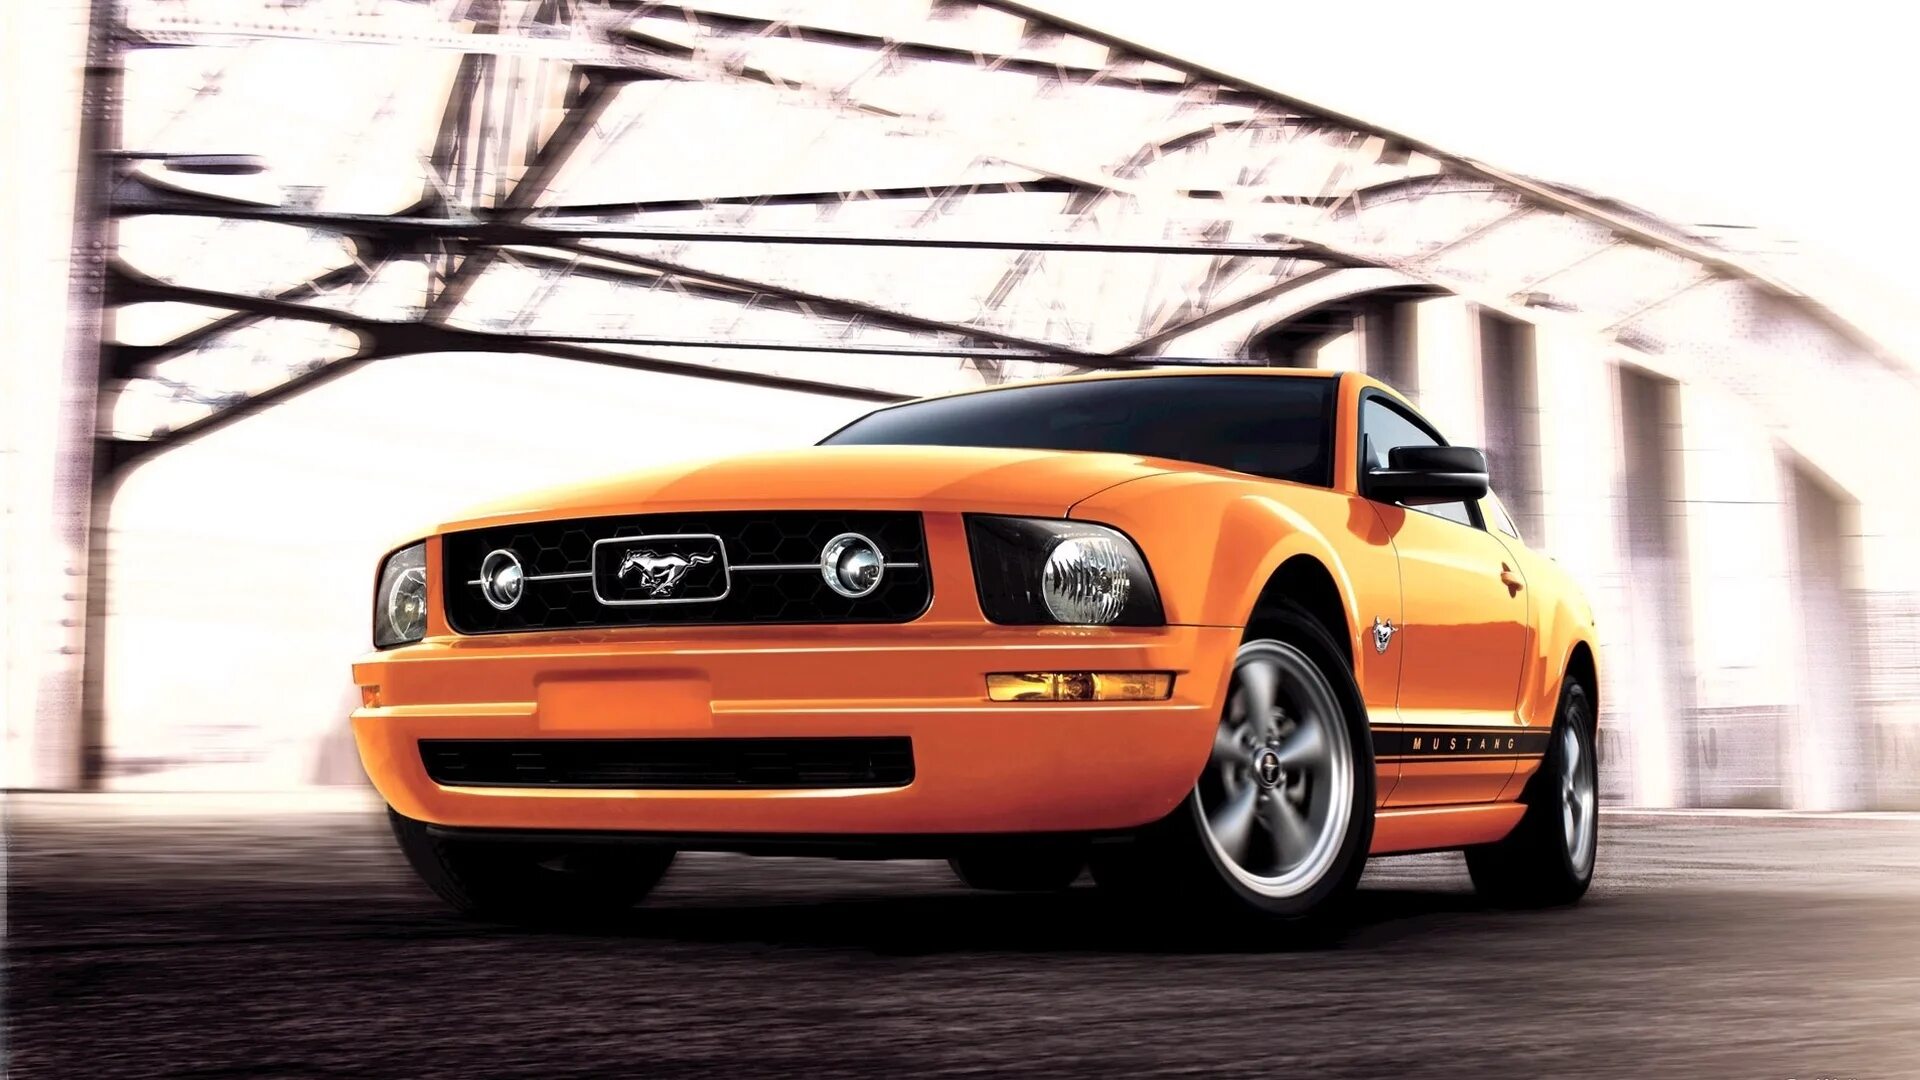 Ford Mustang 2005. Форд Мустанг 2005. Ford Mustang gt 2005 Orange. Форд Мустанг 9. Стол мустанг